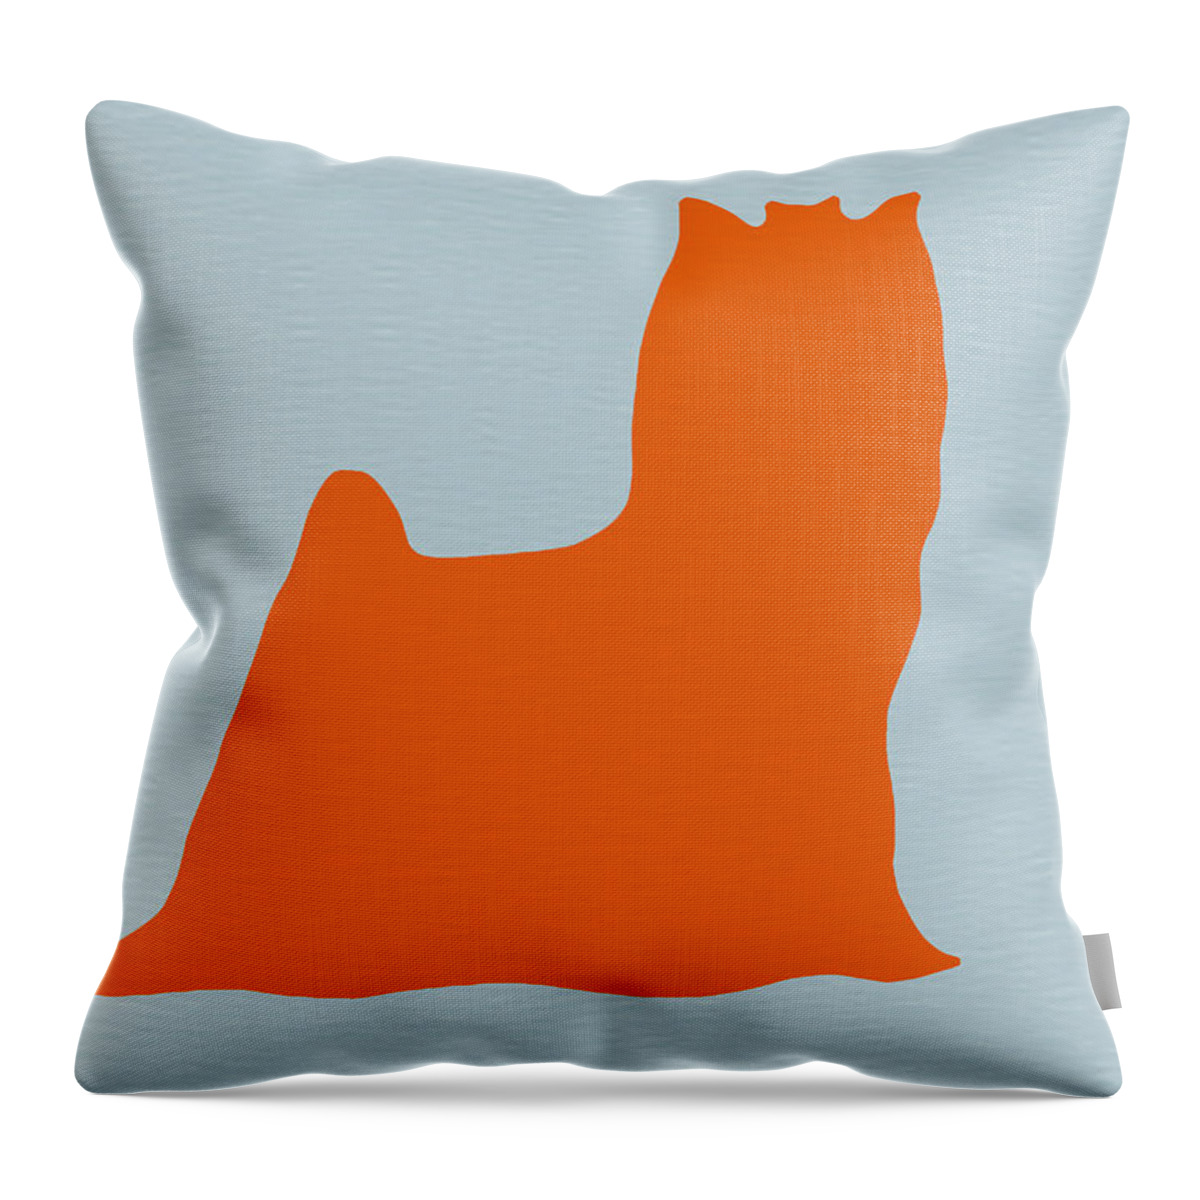 Yorkshire Terrier Throw Pillow featuring the digital art Yorkshire Terrier Orange by Naxart Studio